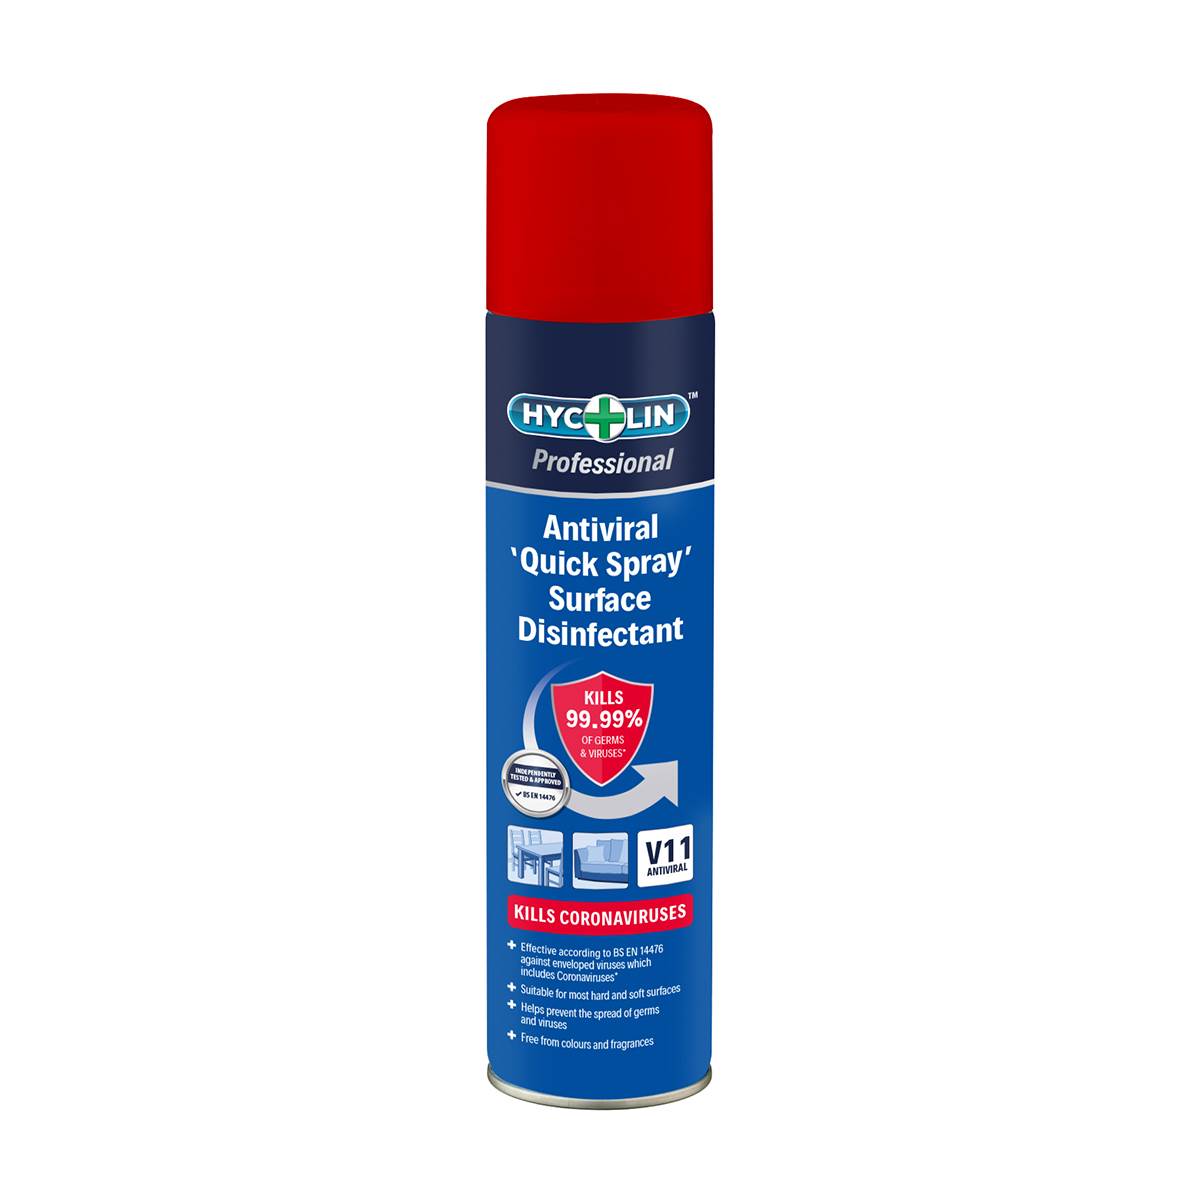 V11 Antiviral Cleaning Sprays, 12x 300ml